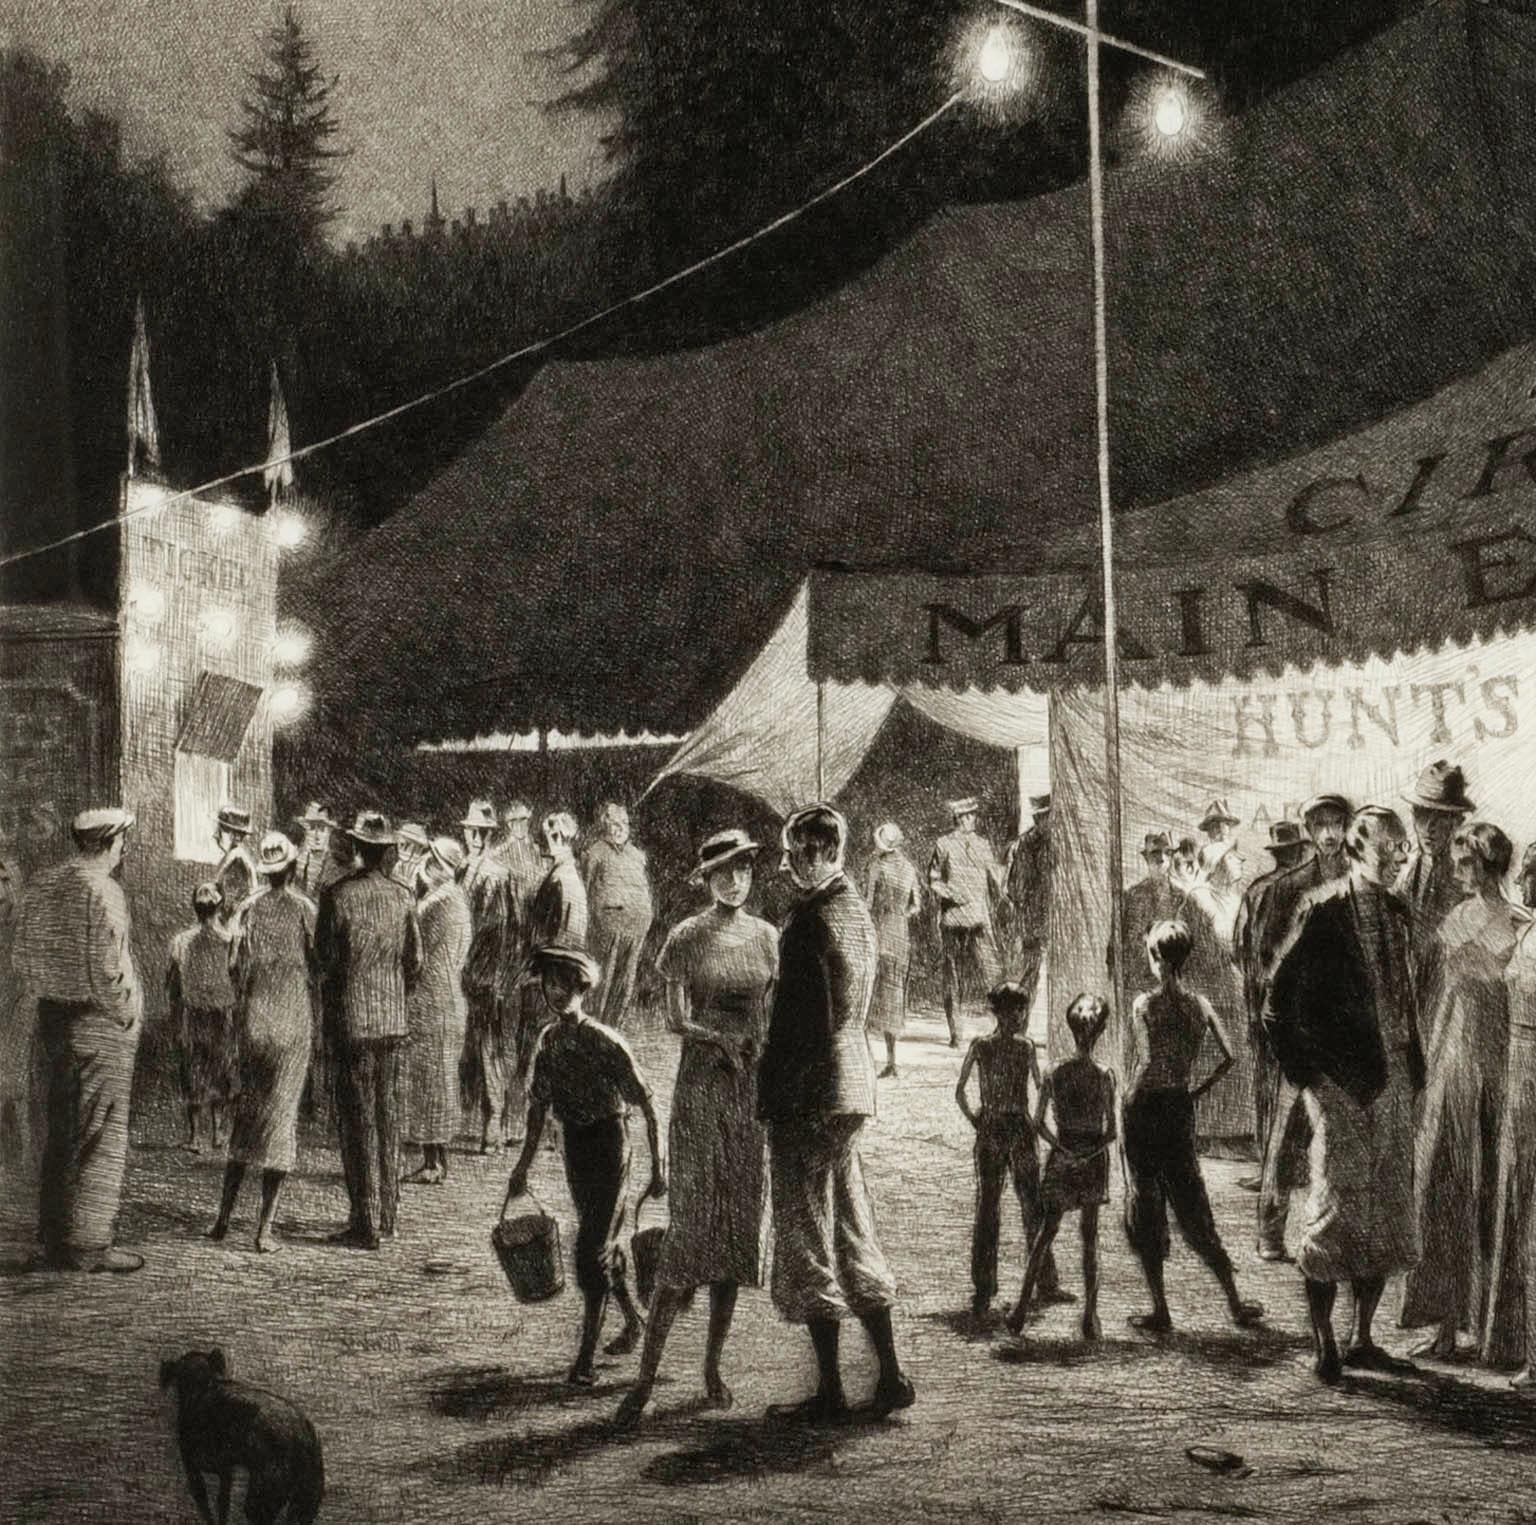 Circus Night. - Print by Martin Lewis